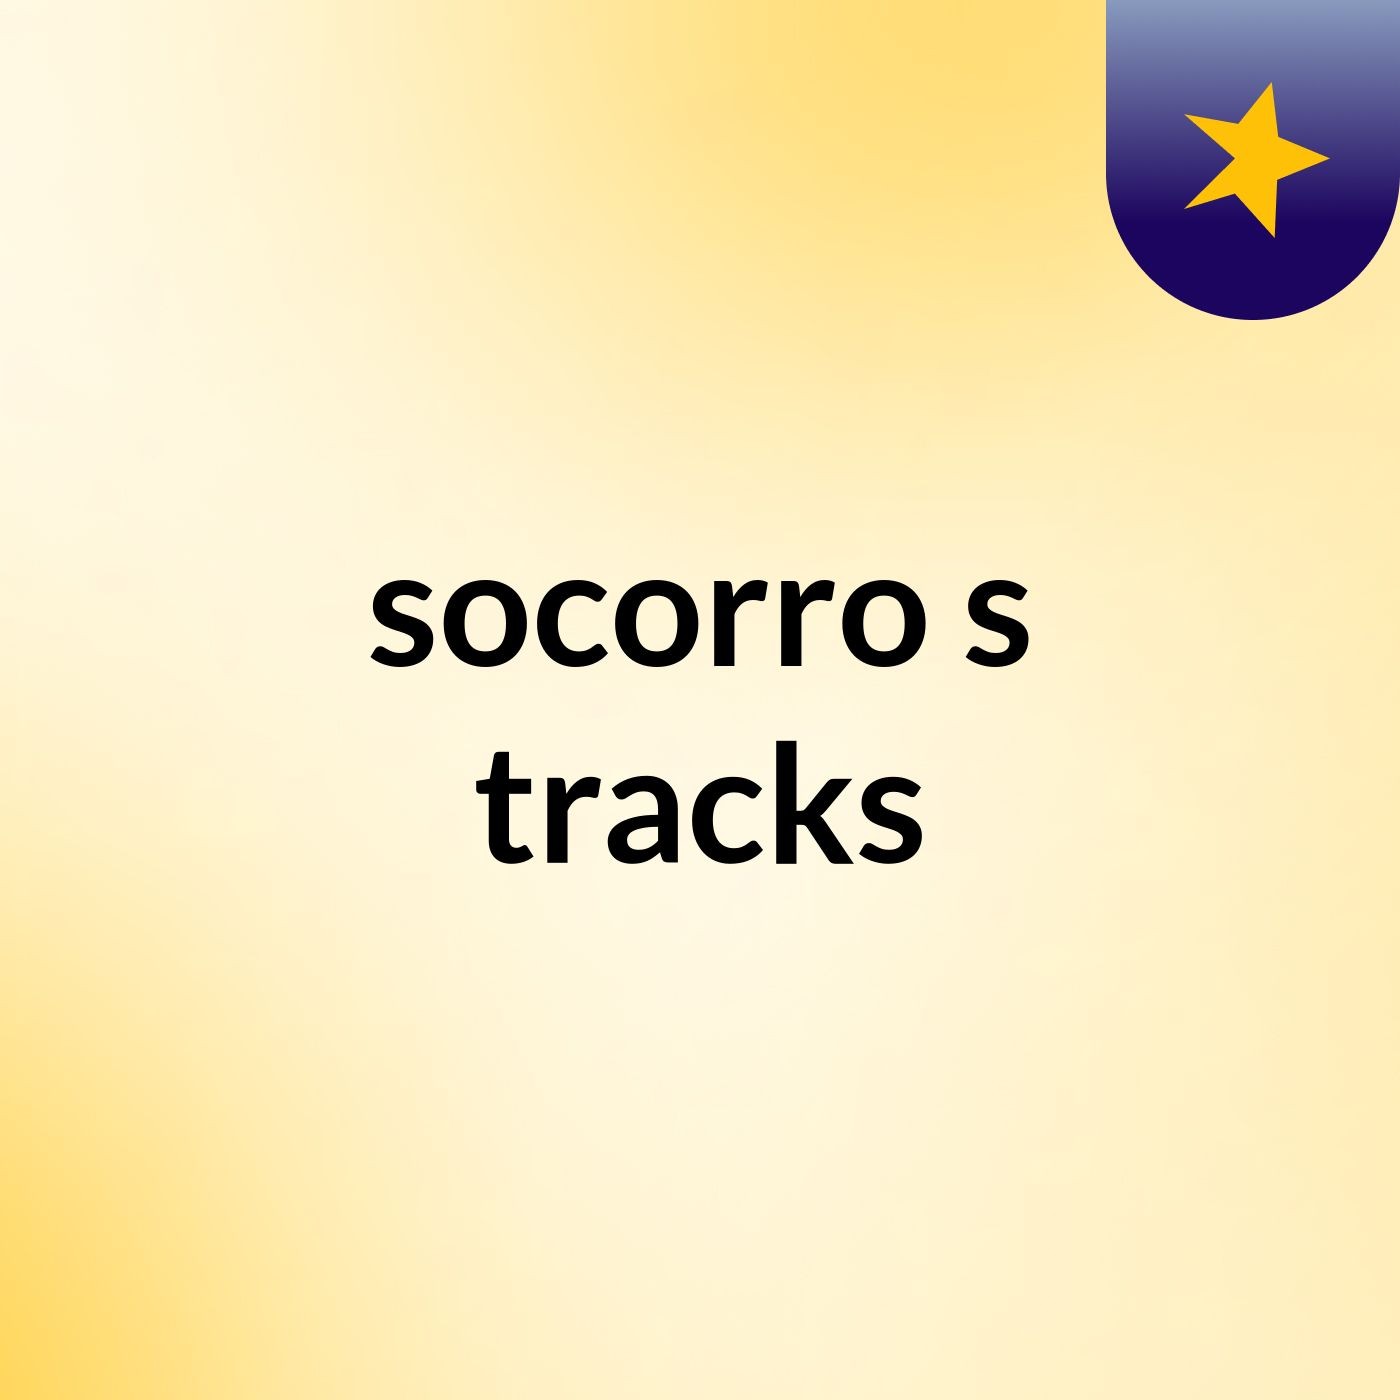 socorro's tracks